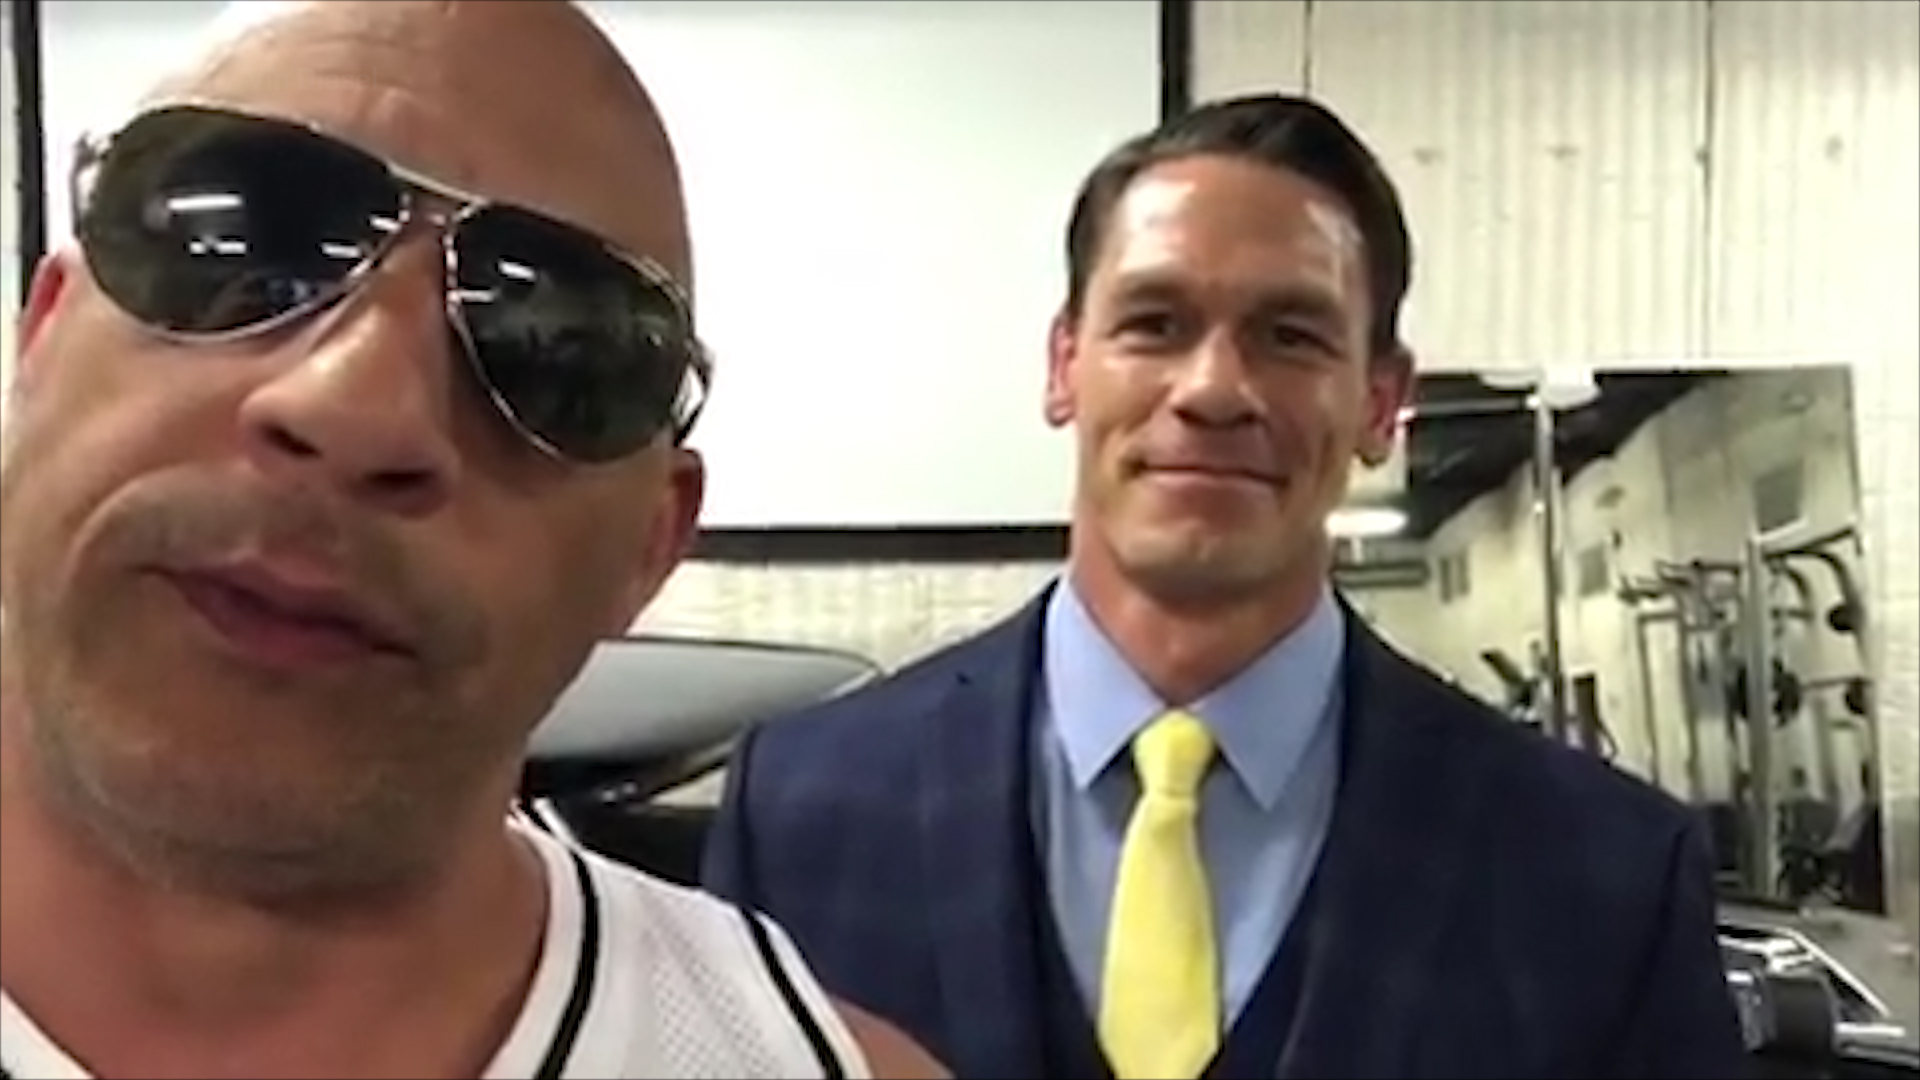 John Cena Vs Vin Diesel Fast 9 Wallpapers